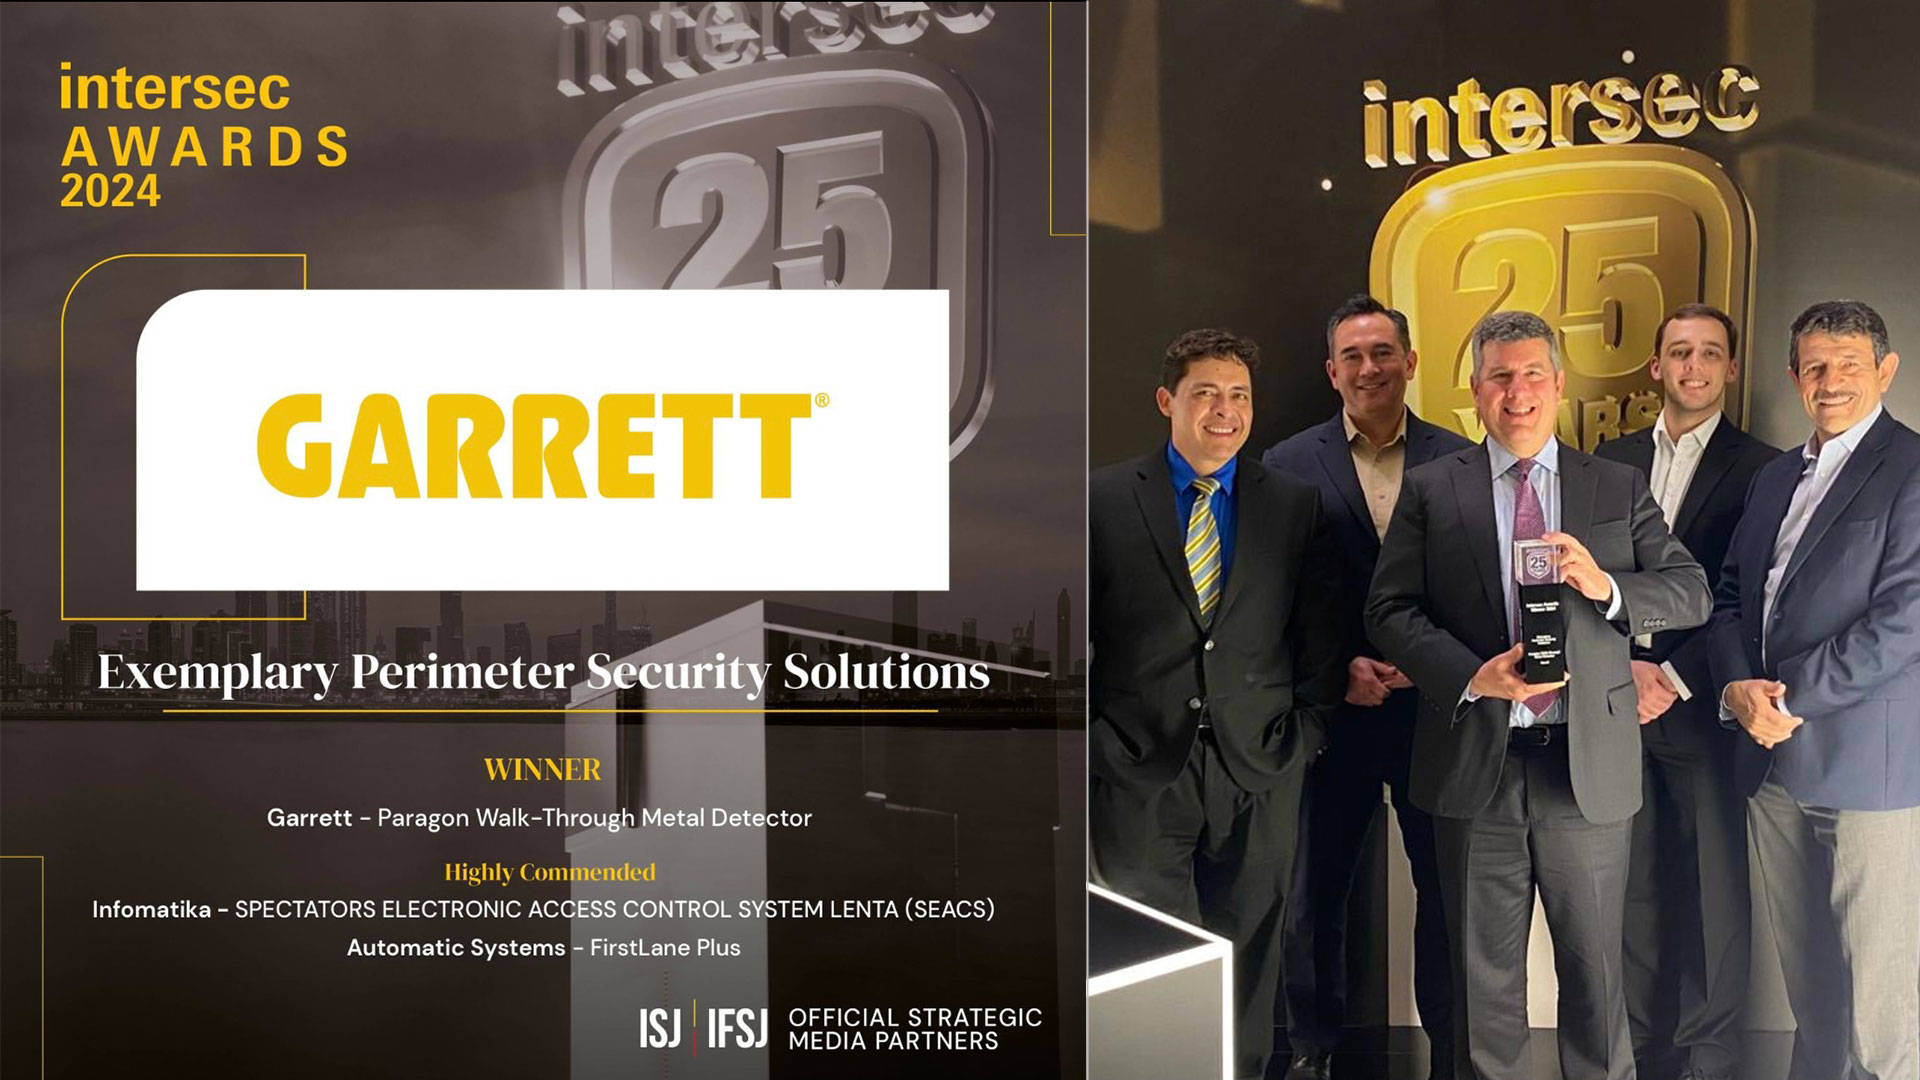 Exemplary Perimeter Security Solutions Award